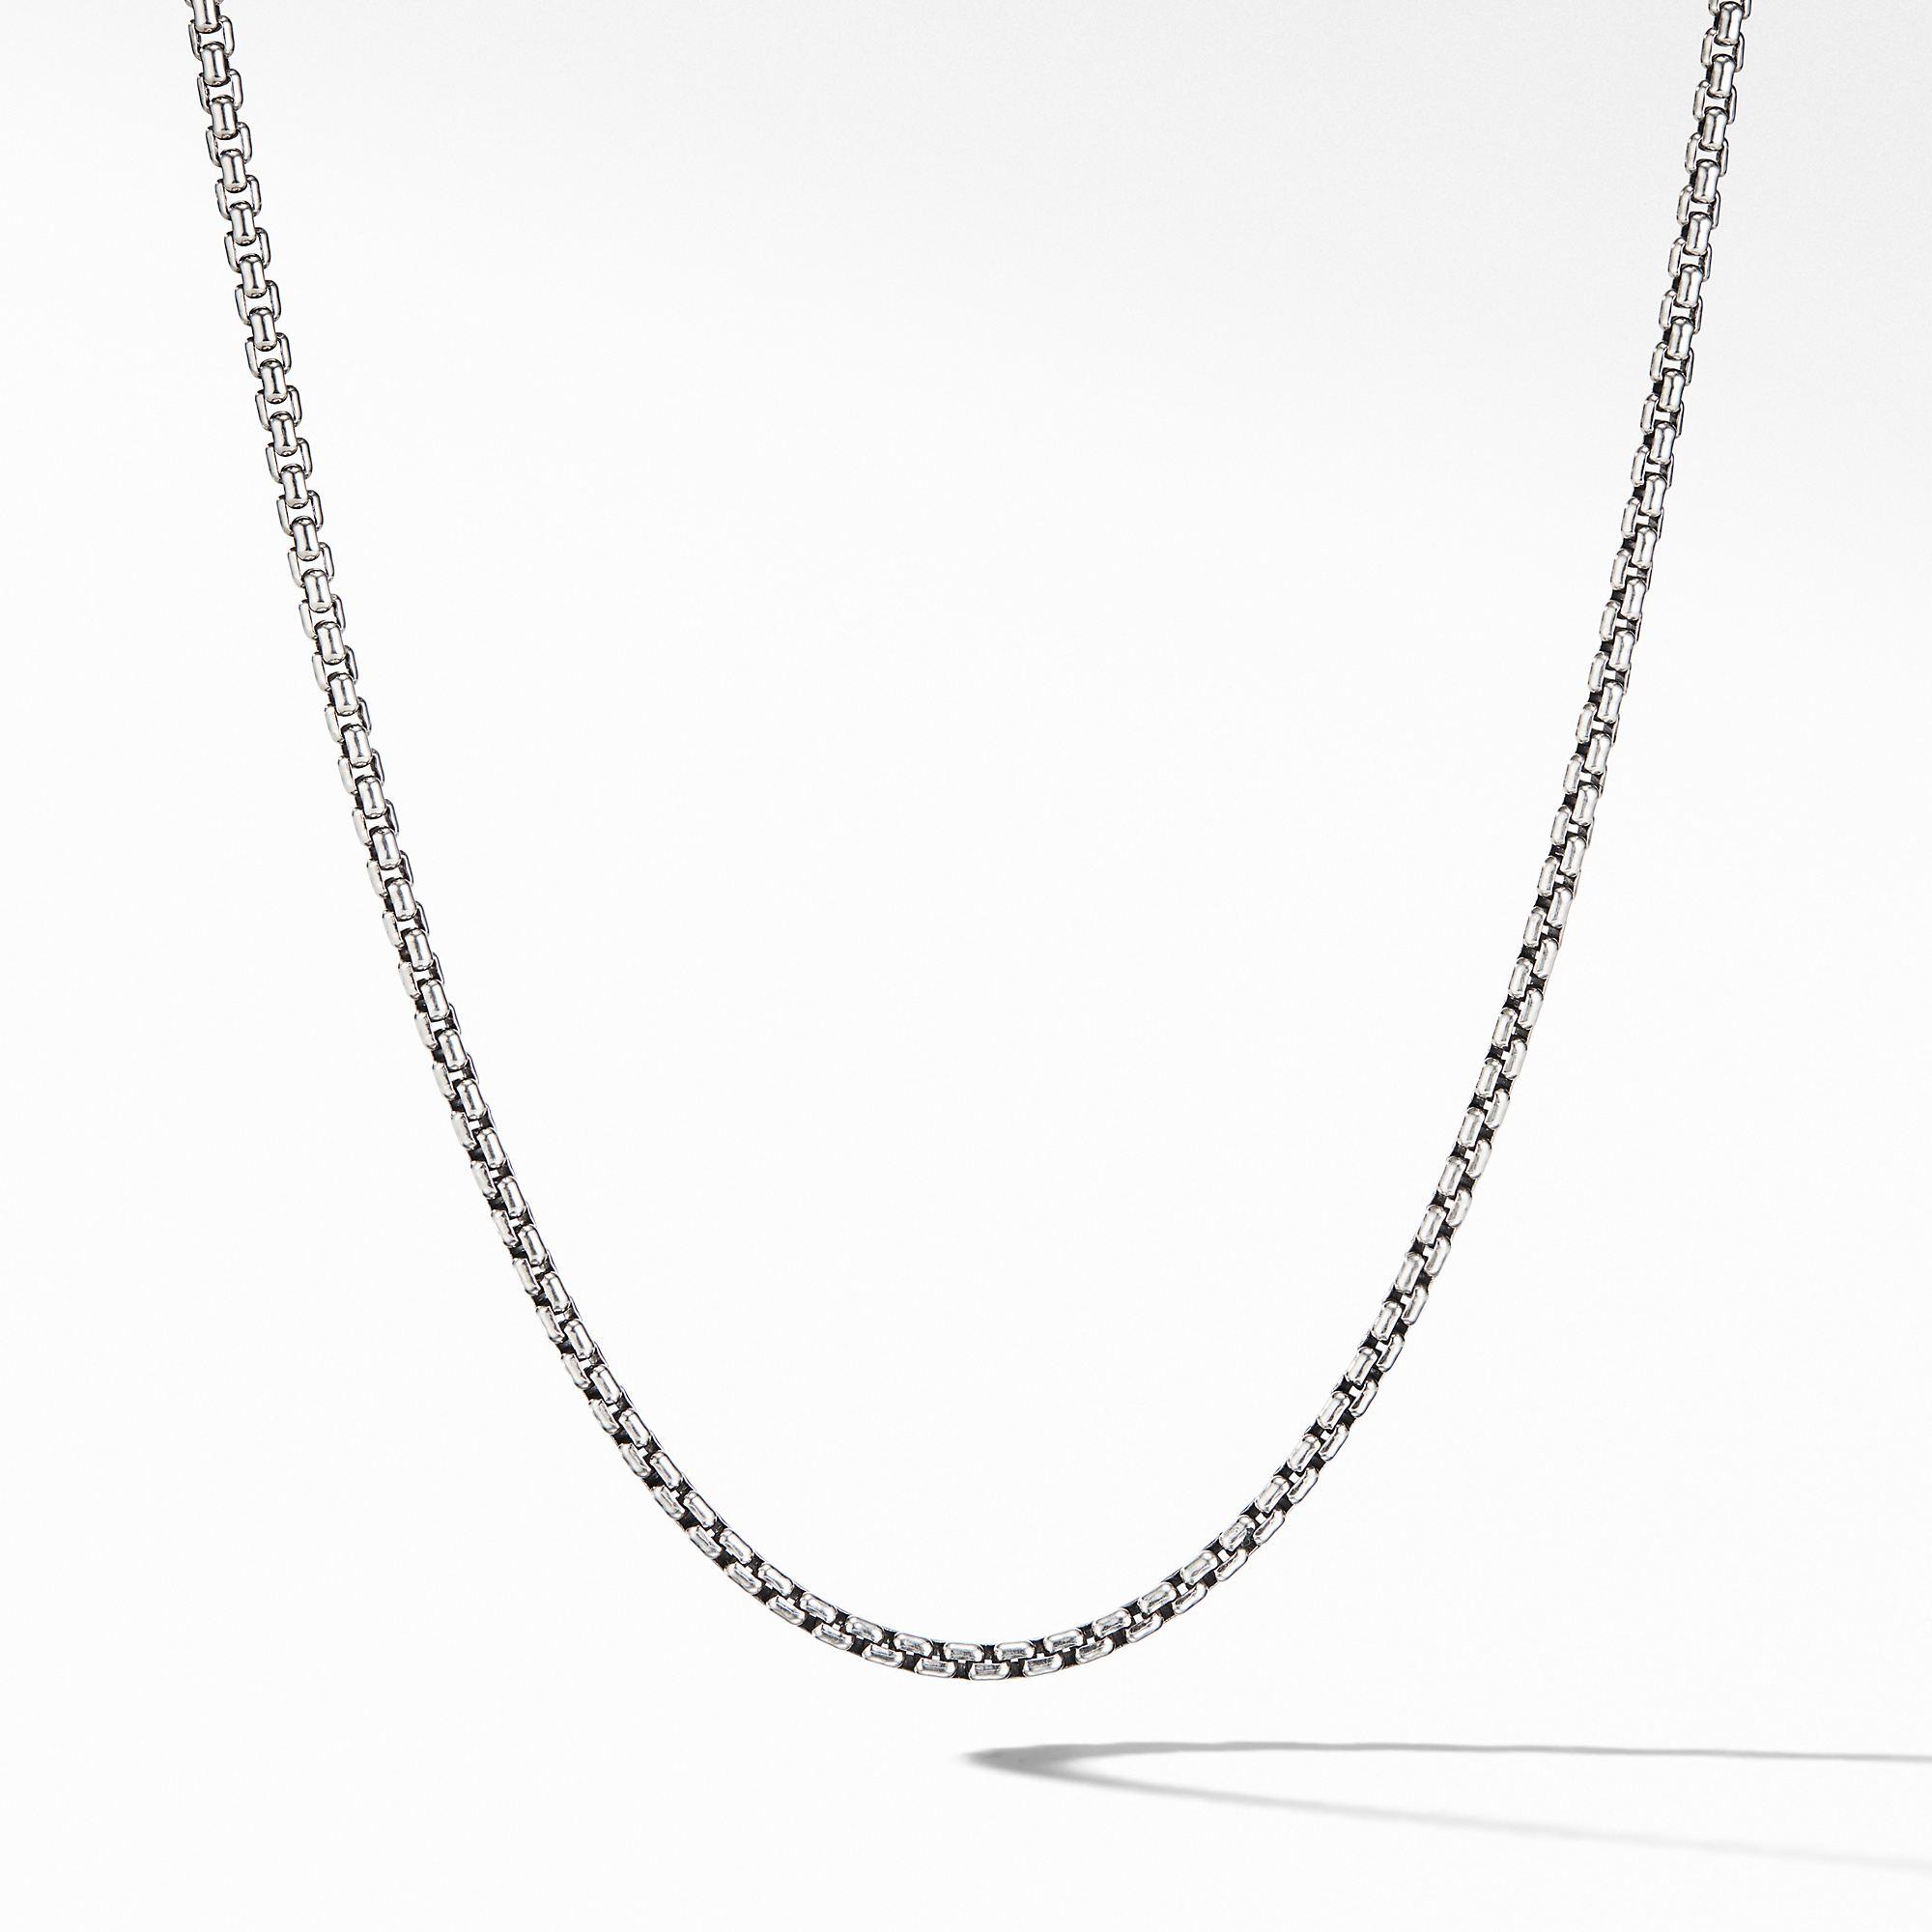 David Yurman Men's small Box Chain Necklace in Sterling Silver, 24 inches